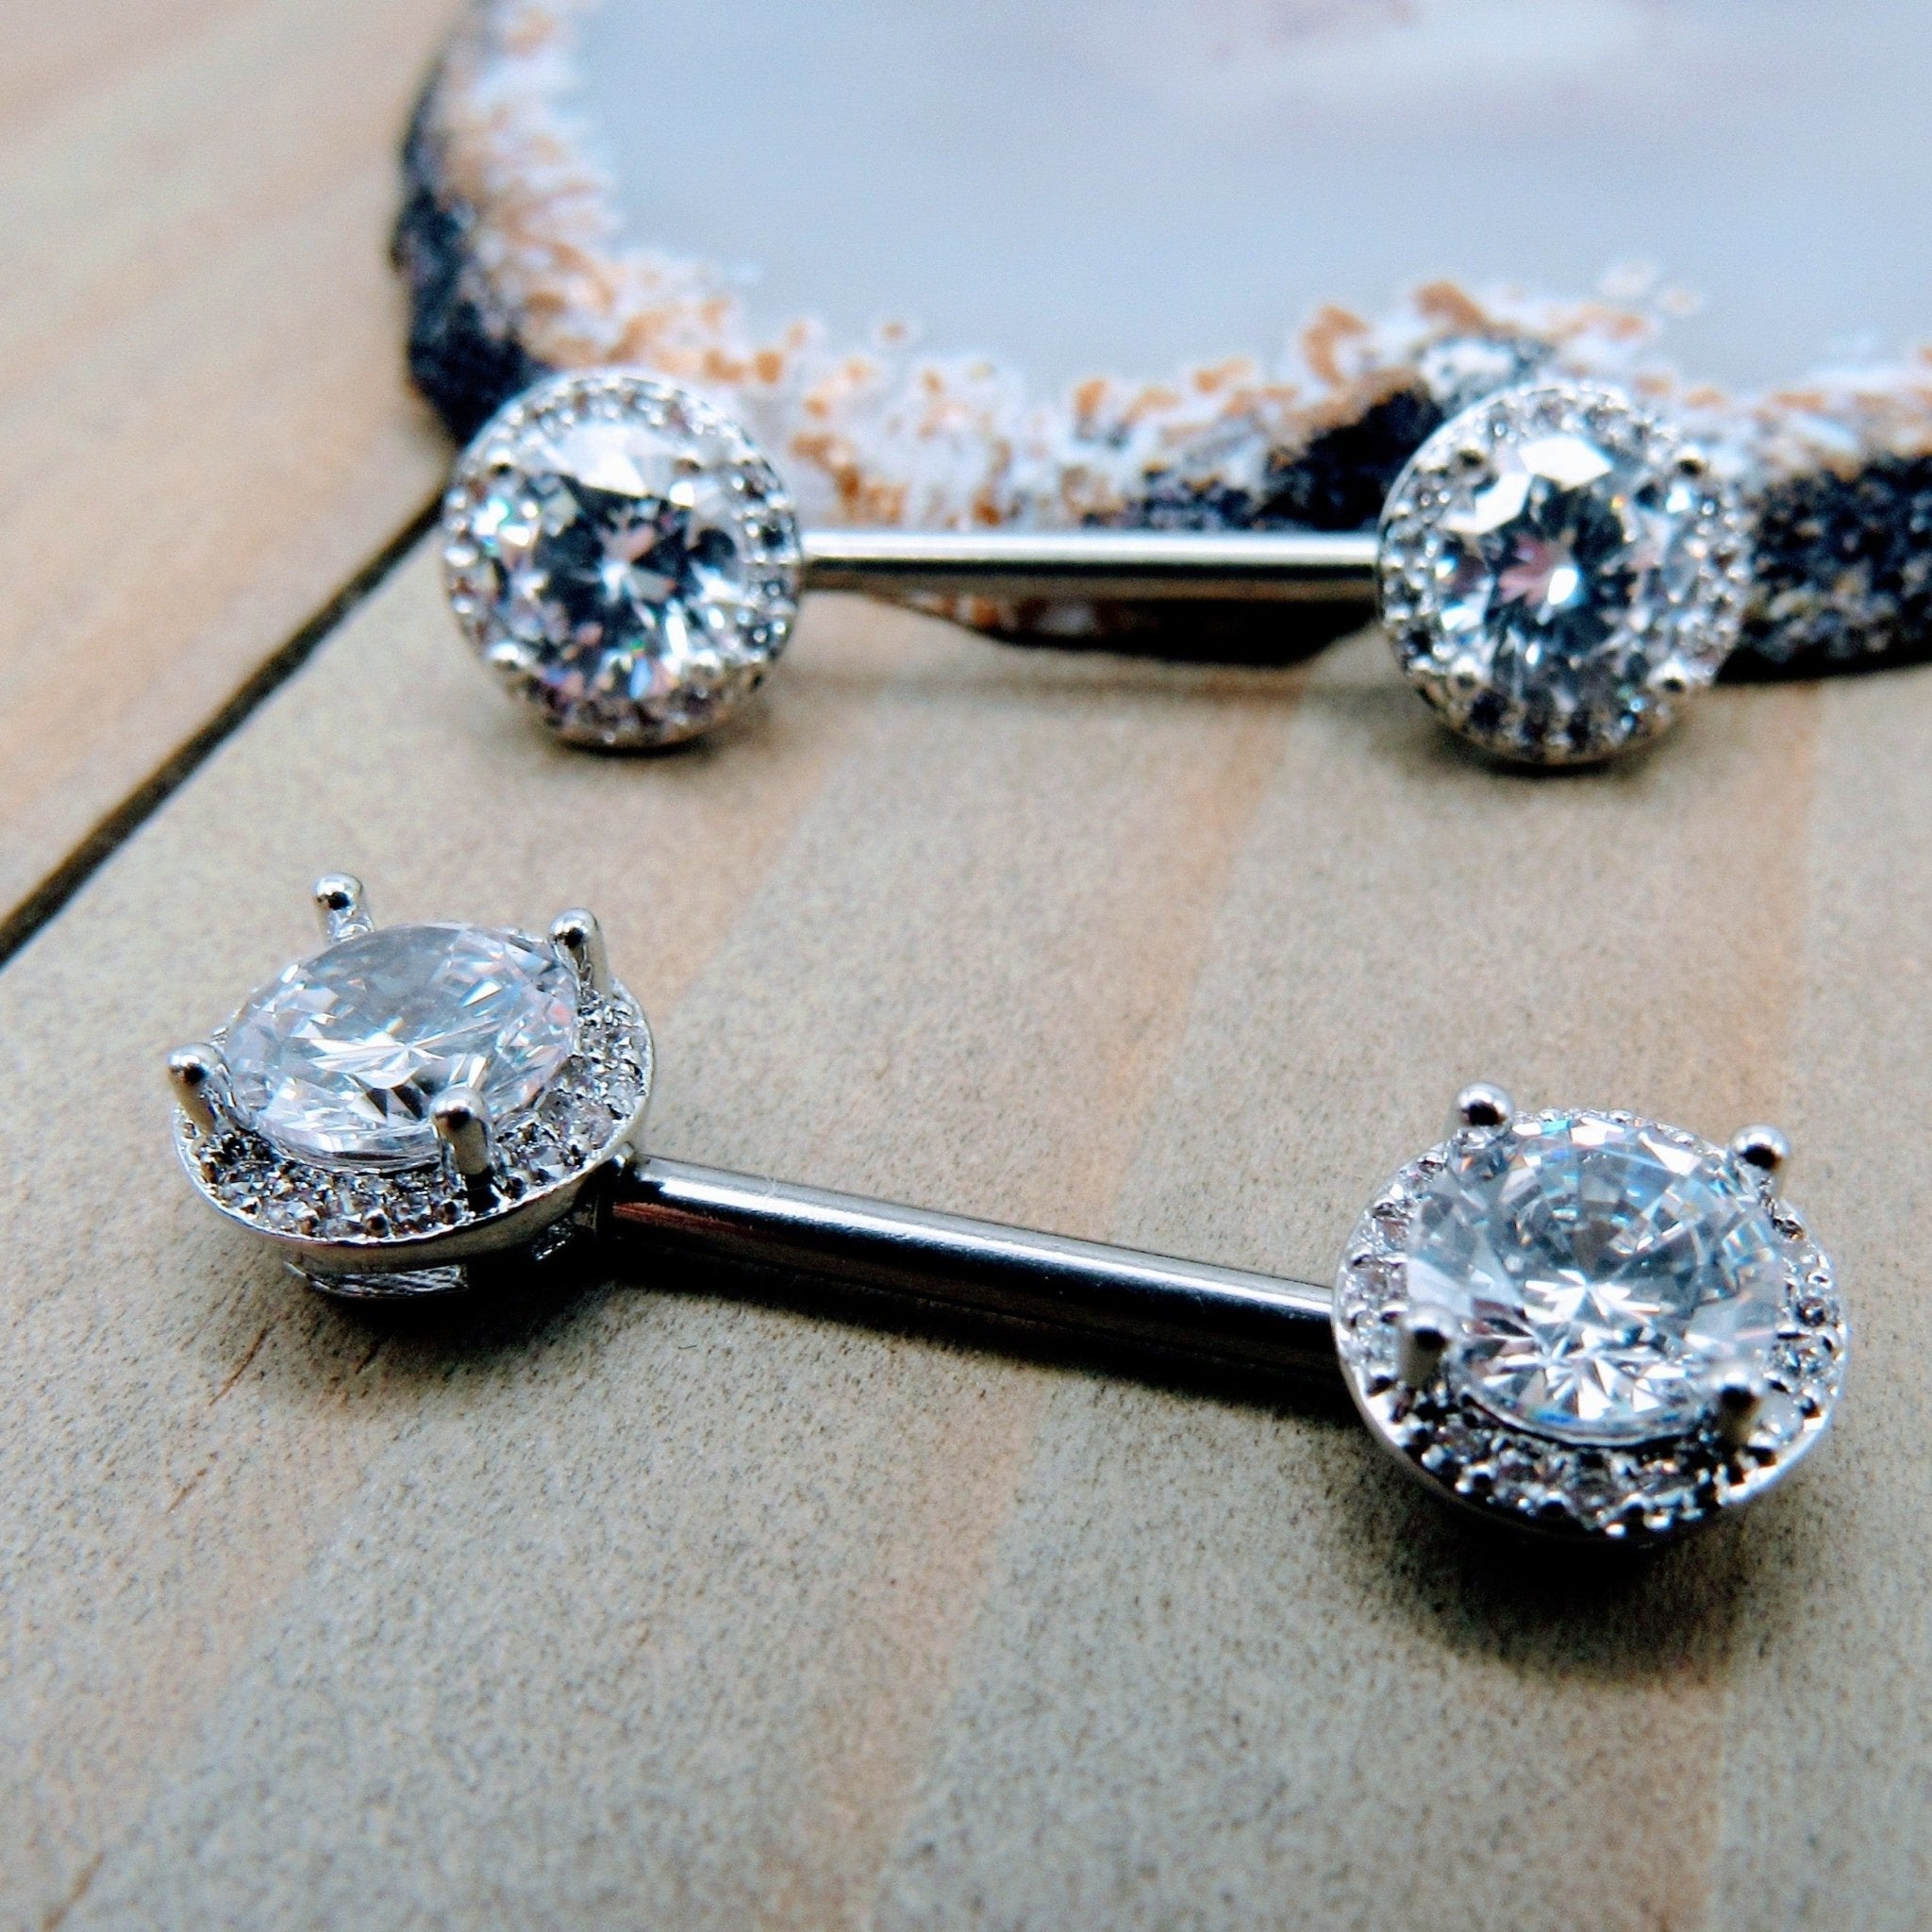 Silver nipple piercing jewelry set 14g 5/8 double ab gemstone